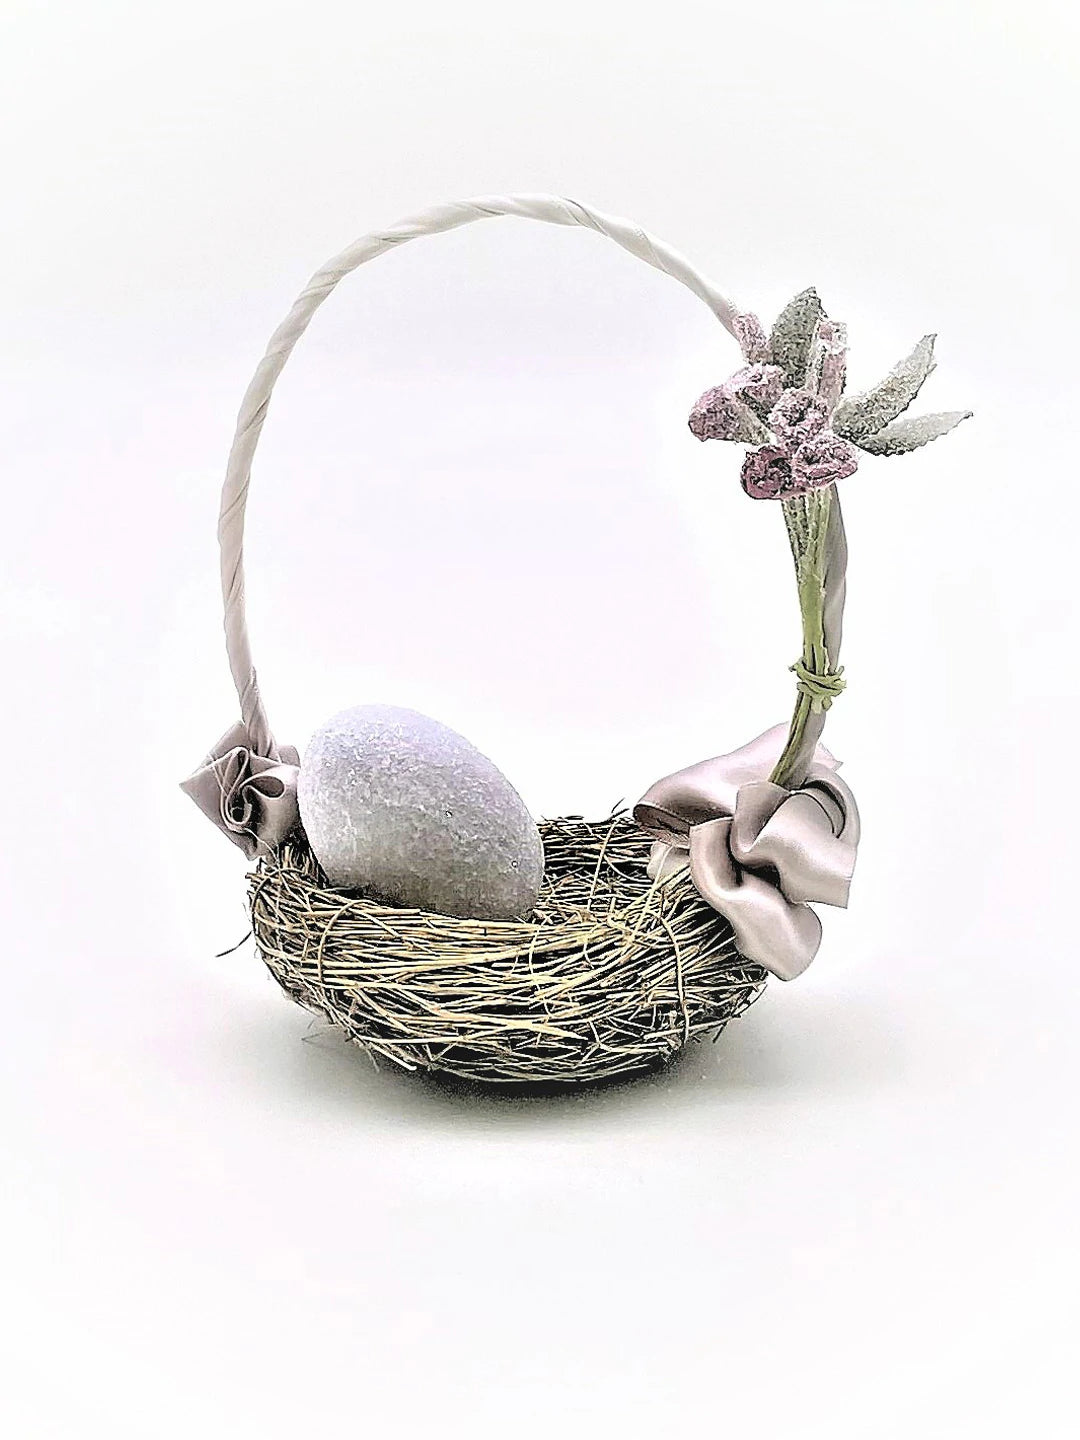 Handled Nest Basket with Mauve Flowers